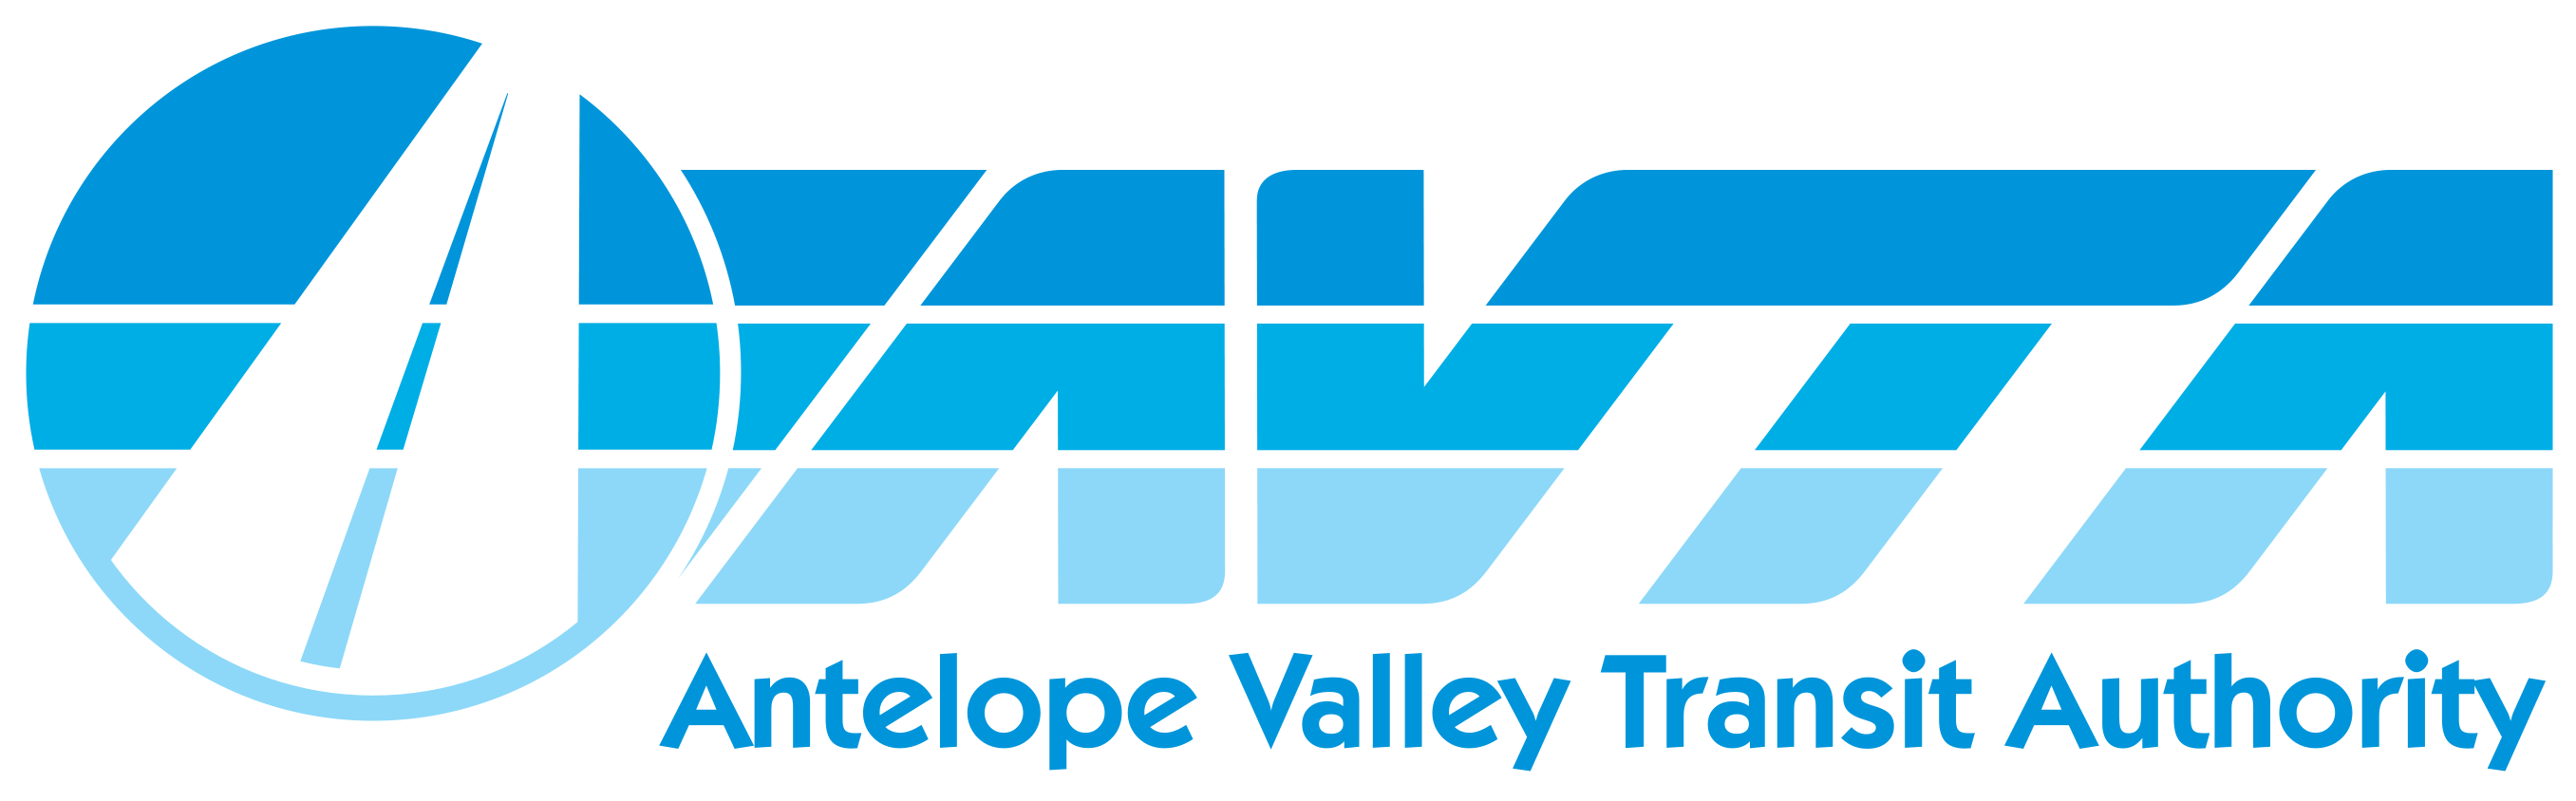 Antelope Valley Transit authority logo